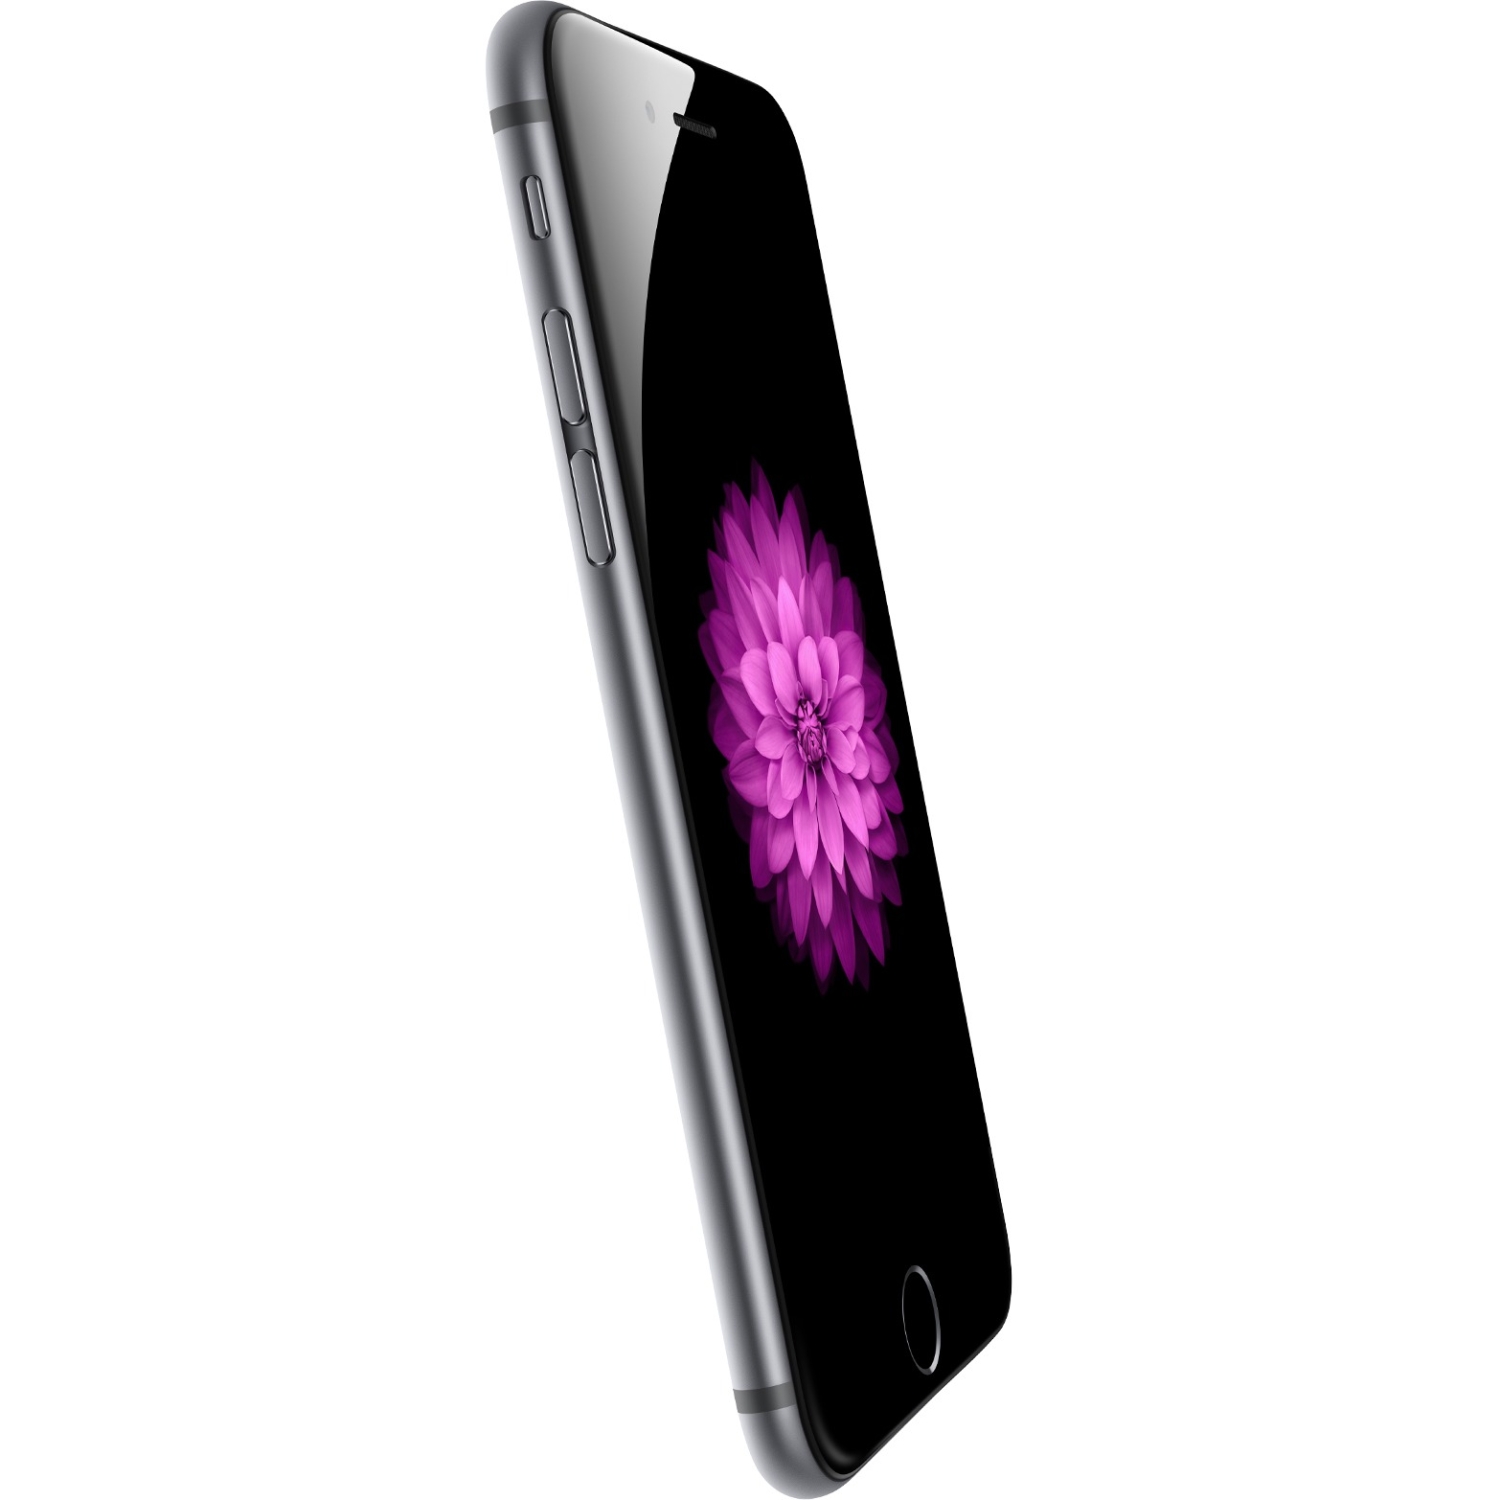 Original Apple iPhone 6s Plus Smartphone 5.5 4G LTE Touch ID